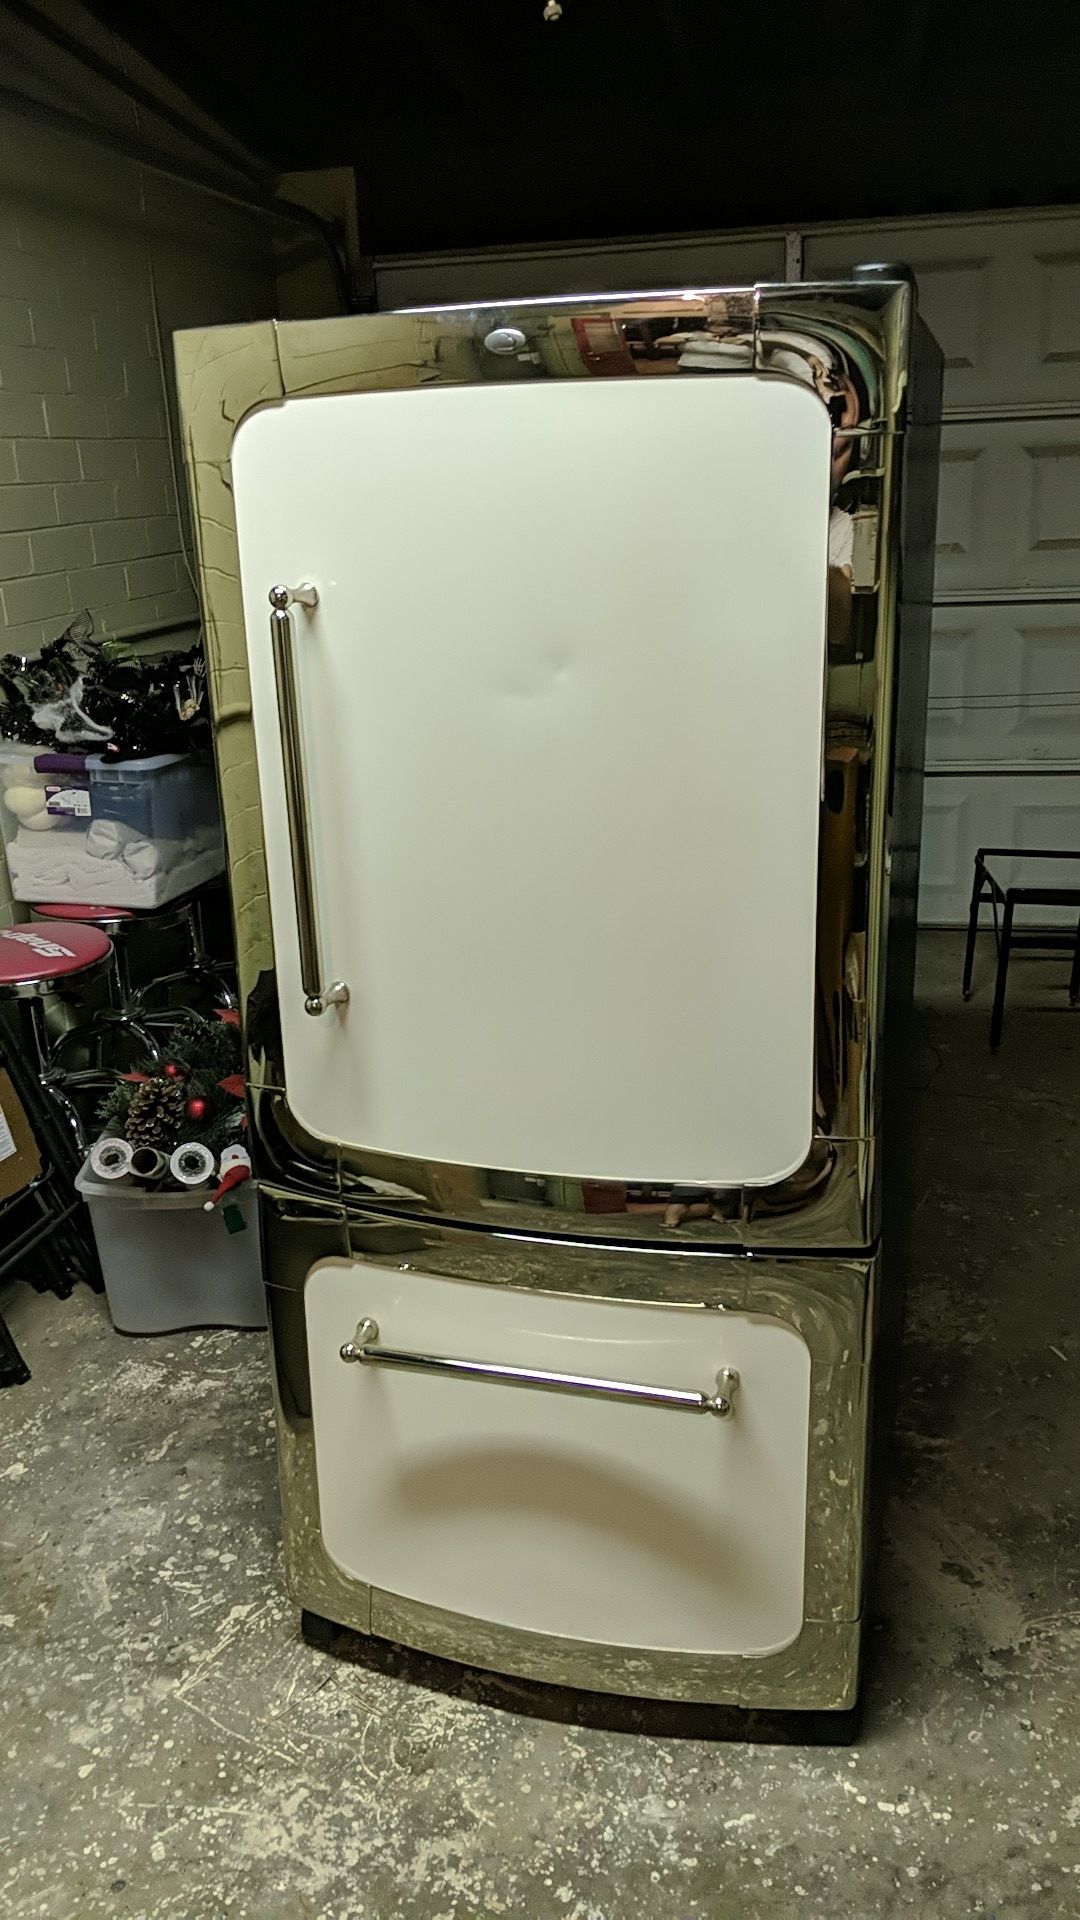 Heartland Appliances Retro Refrigerator Freezer White and Stainless Steel 30"W x 66"H x 32"D